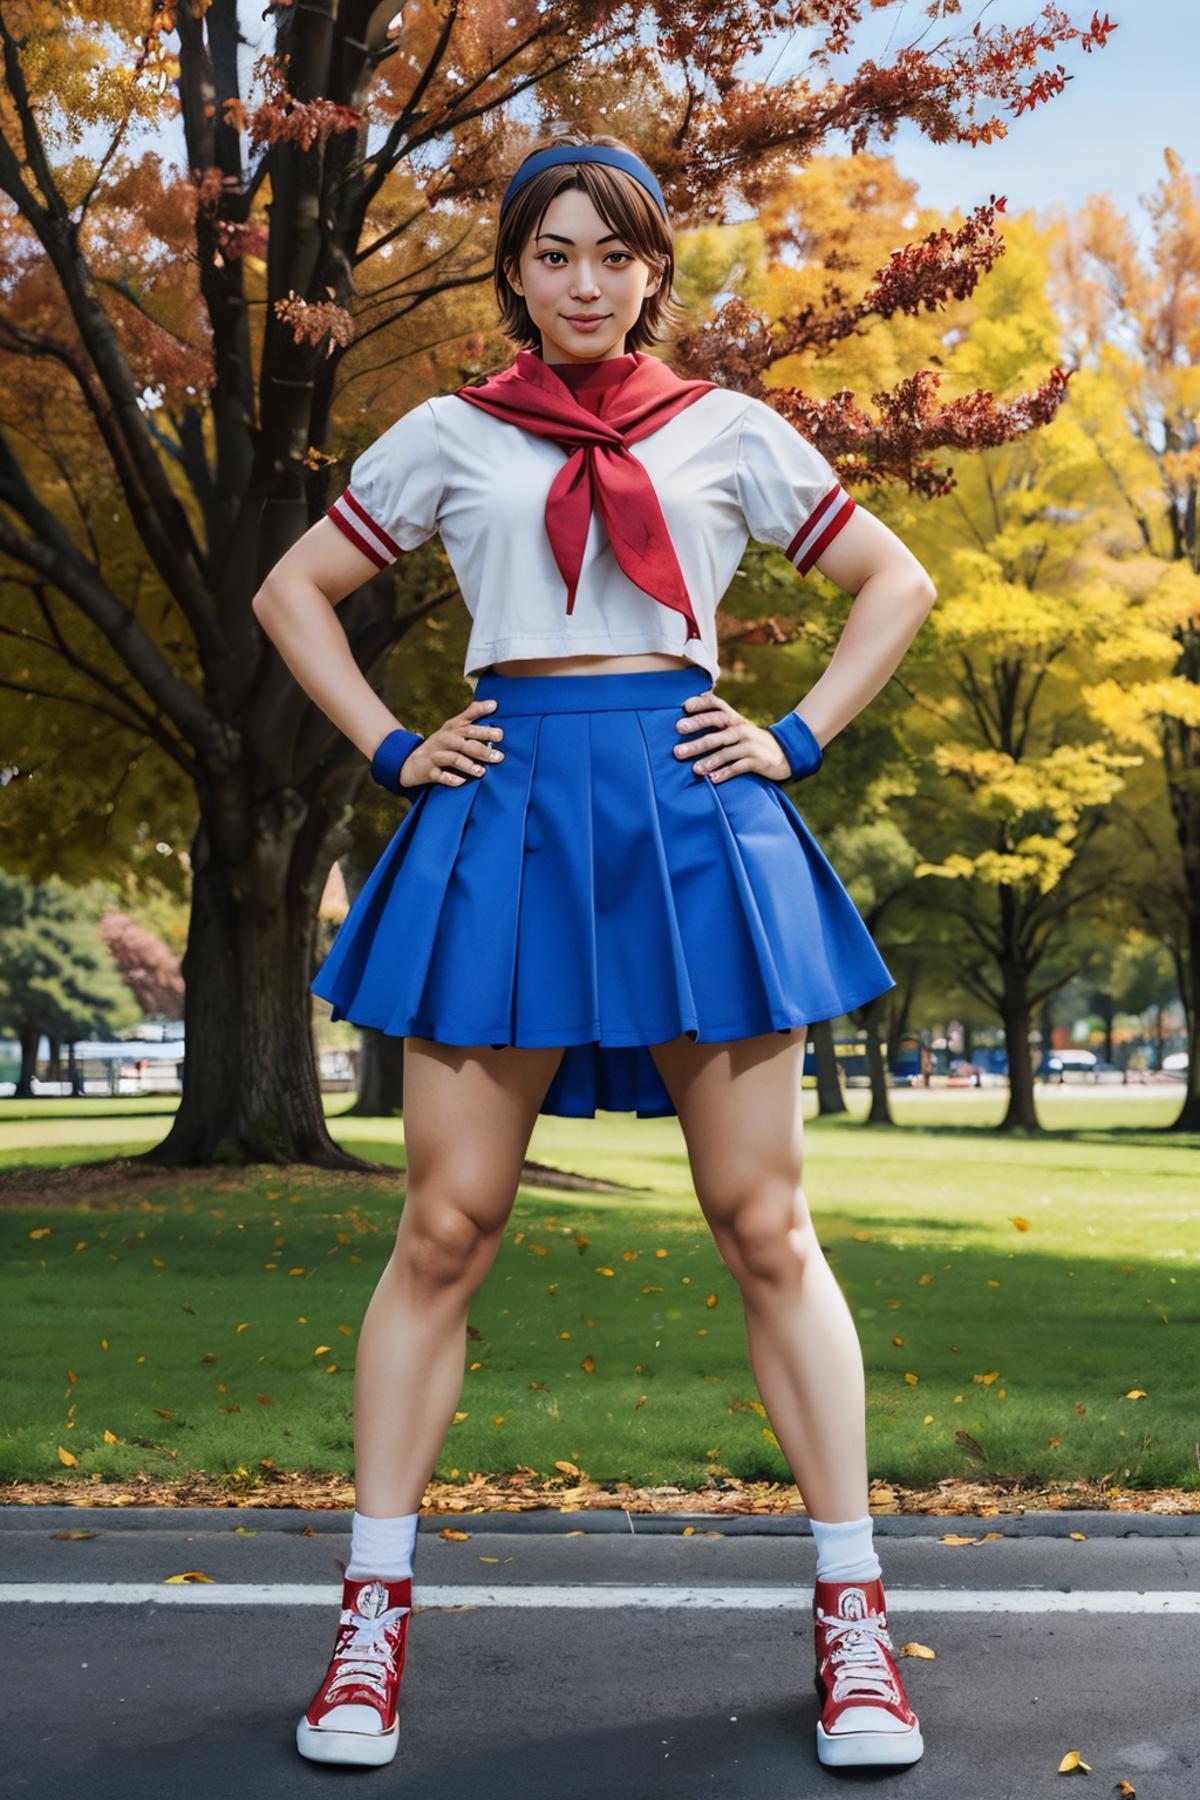 Sakura - Street Fighter (SF5/SF4 face) (Classic attire) image by wikkitikki